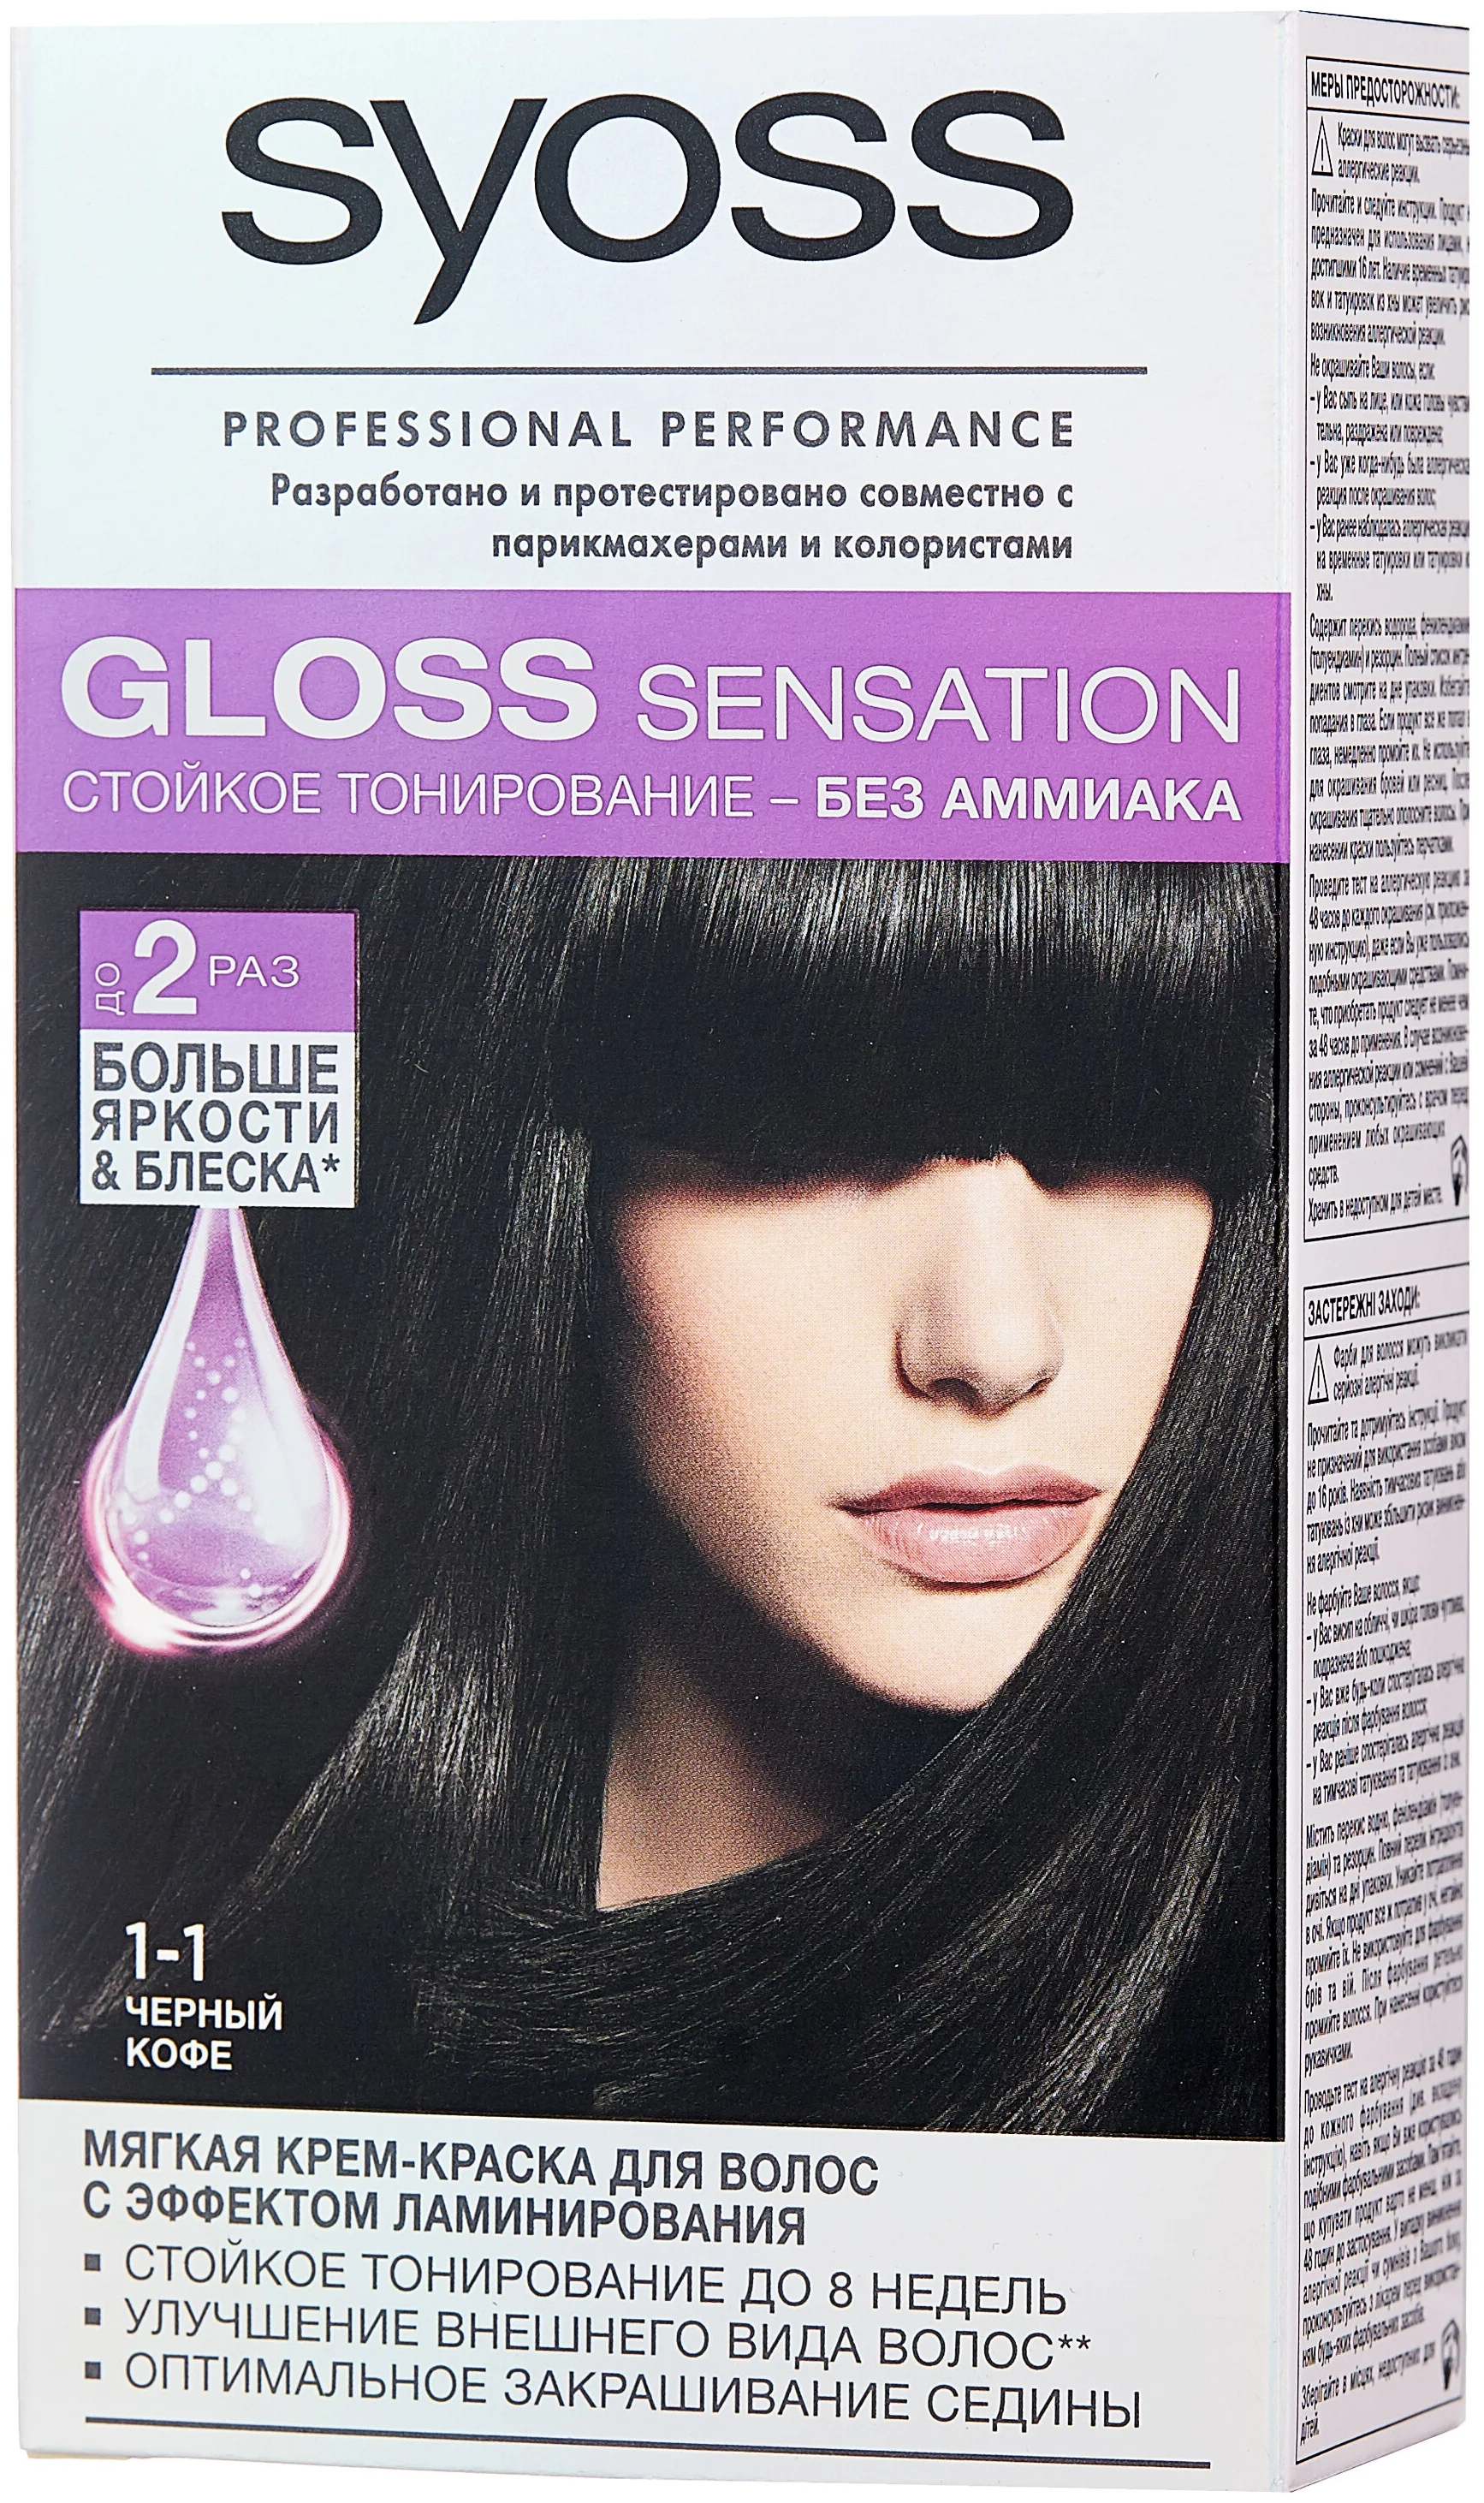 Syoss "Gloss Sensation" - вид окрашивания: стойкое